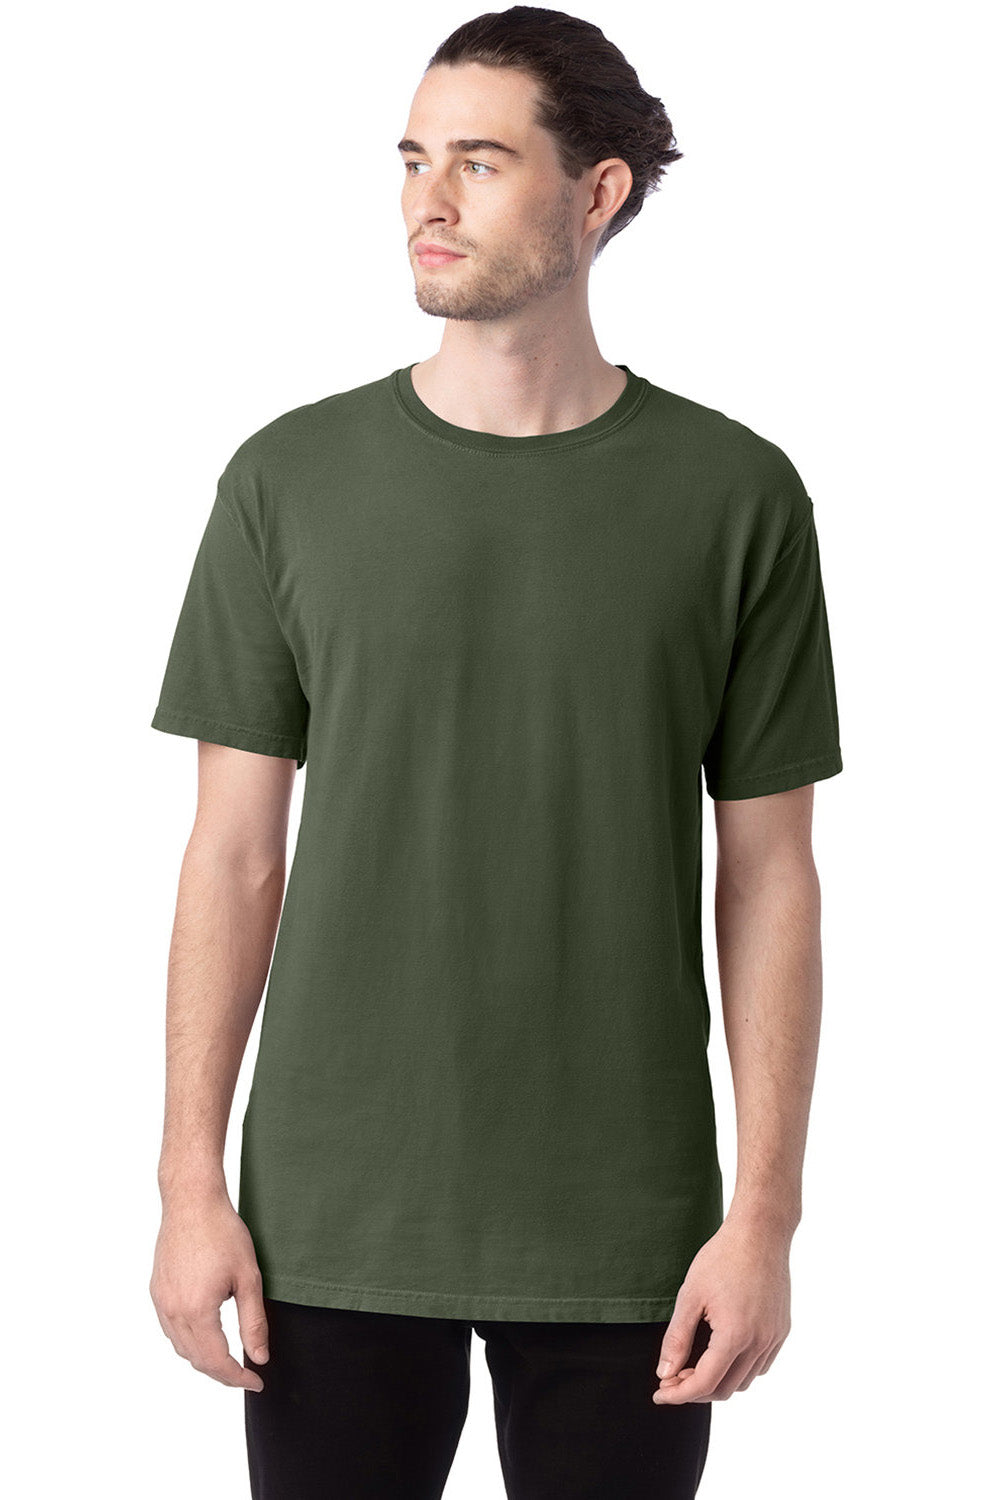 ComfortWash by Hanes GDH100 Mens Short Sleeve Crewneck T-Shirt Moss Green Front